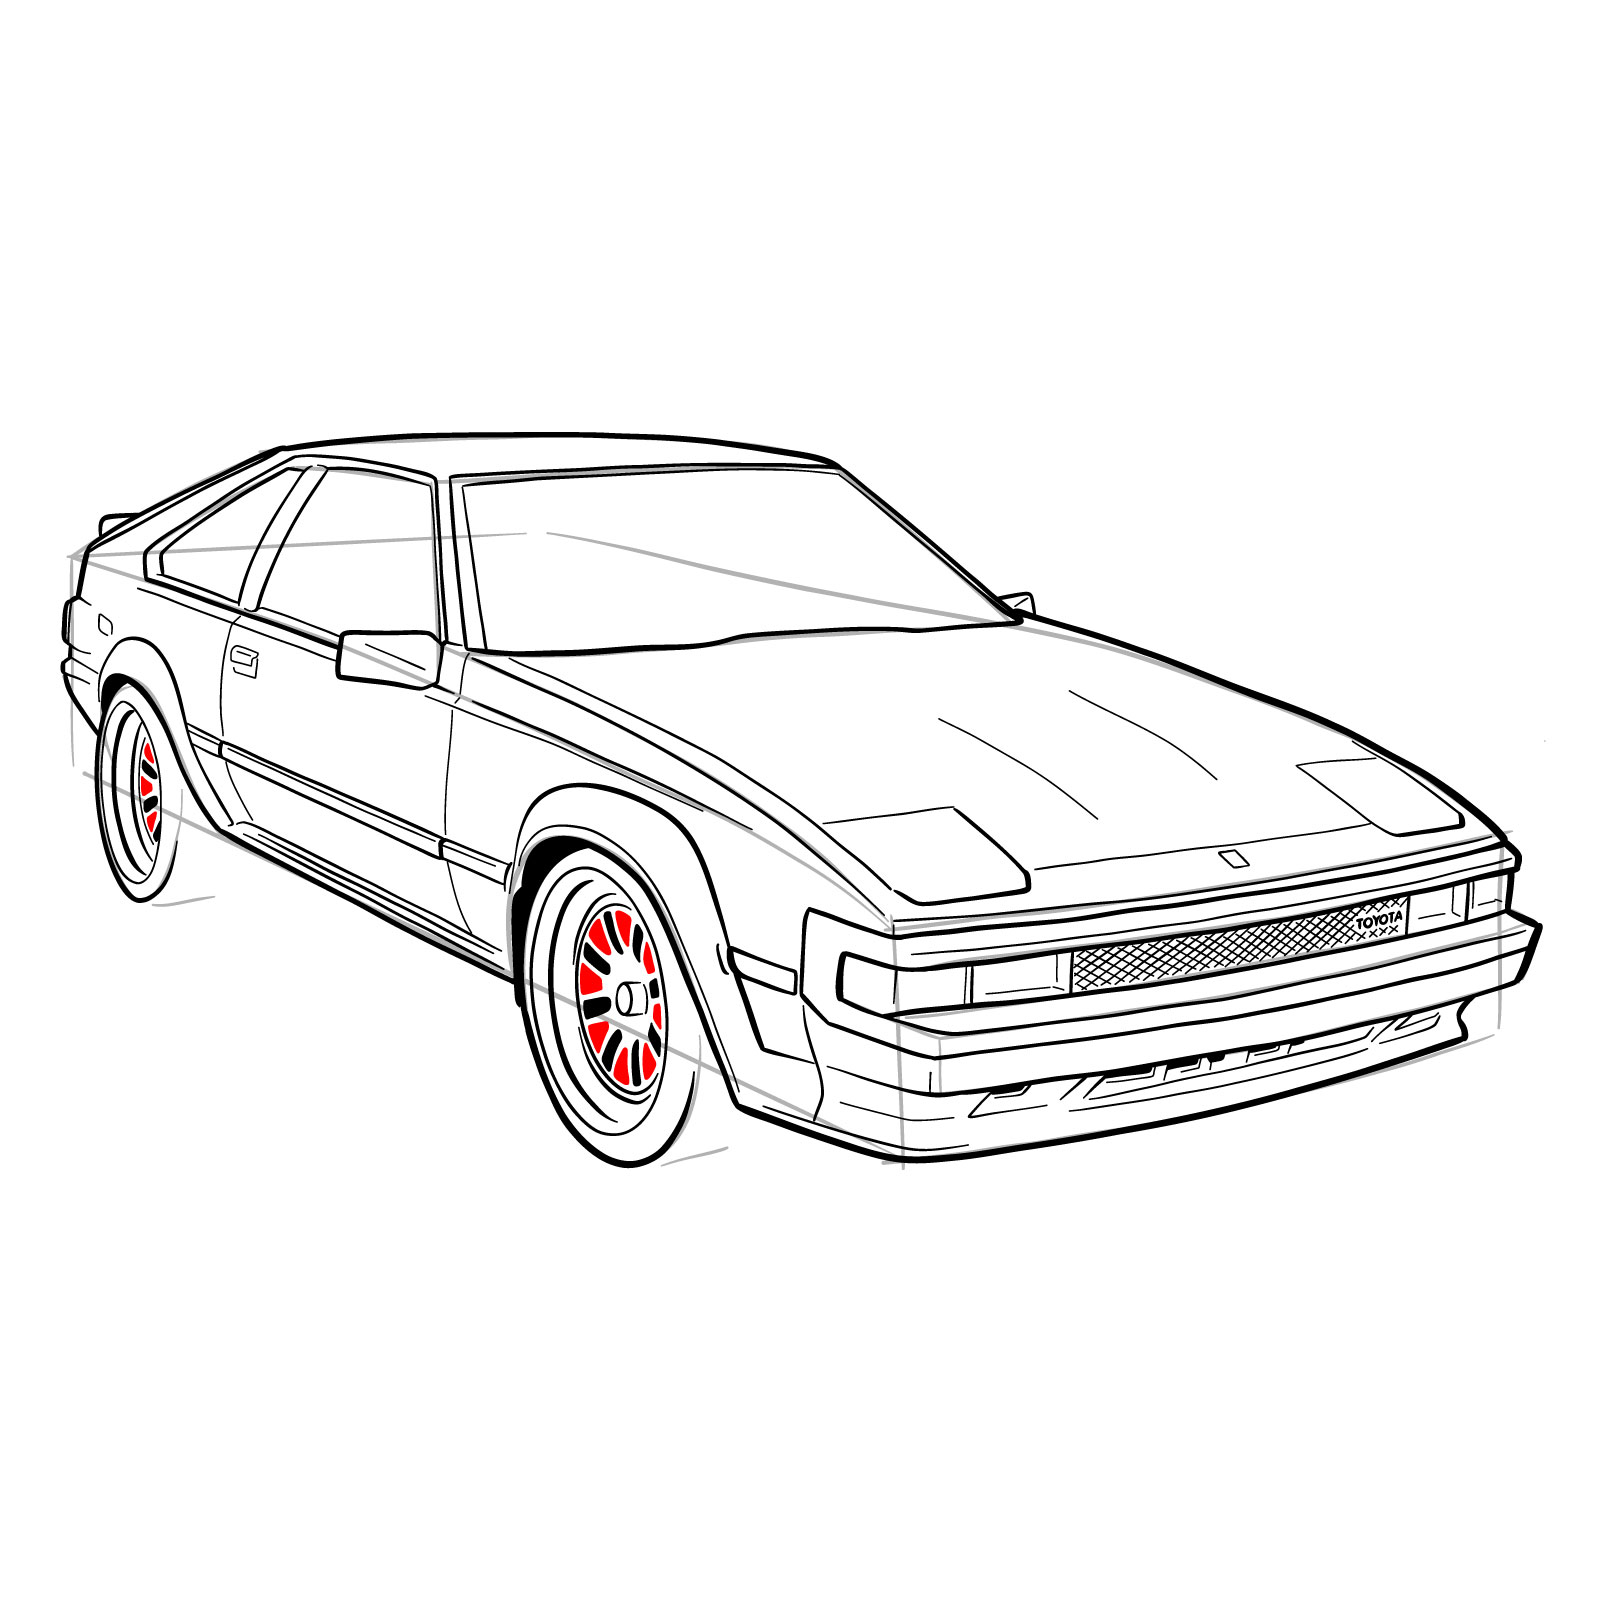 How to draw a 1985 Toyota Celica Supra P Type MK 2 - step 37